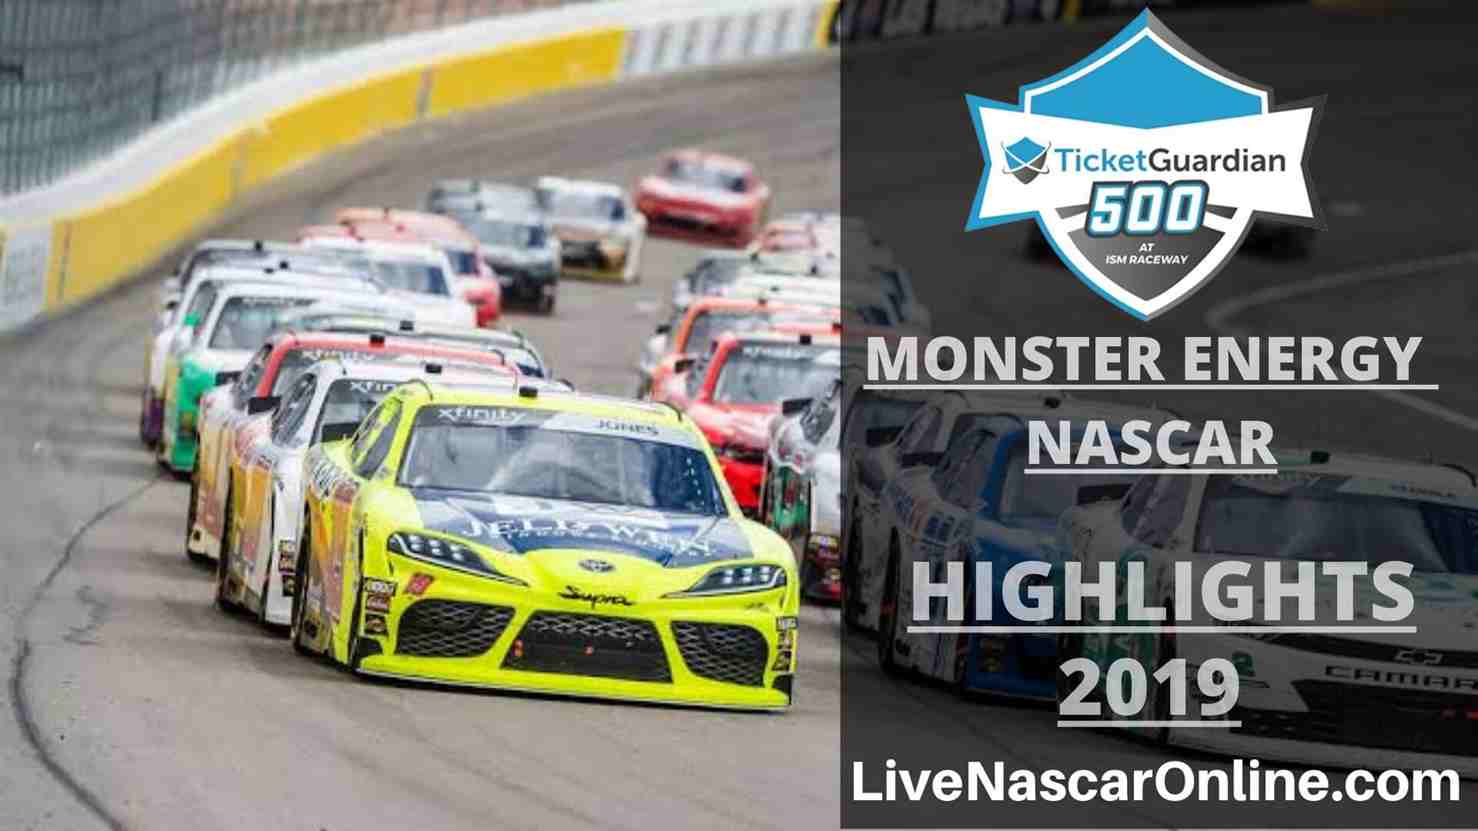 NASCAR Monster Energy TICKETGUARDIAN 500 Highlights 2019 Online